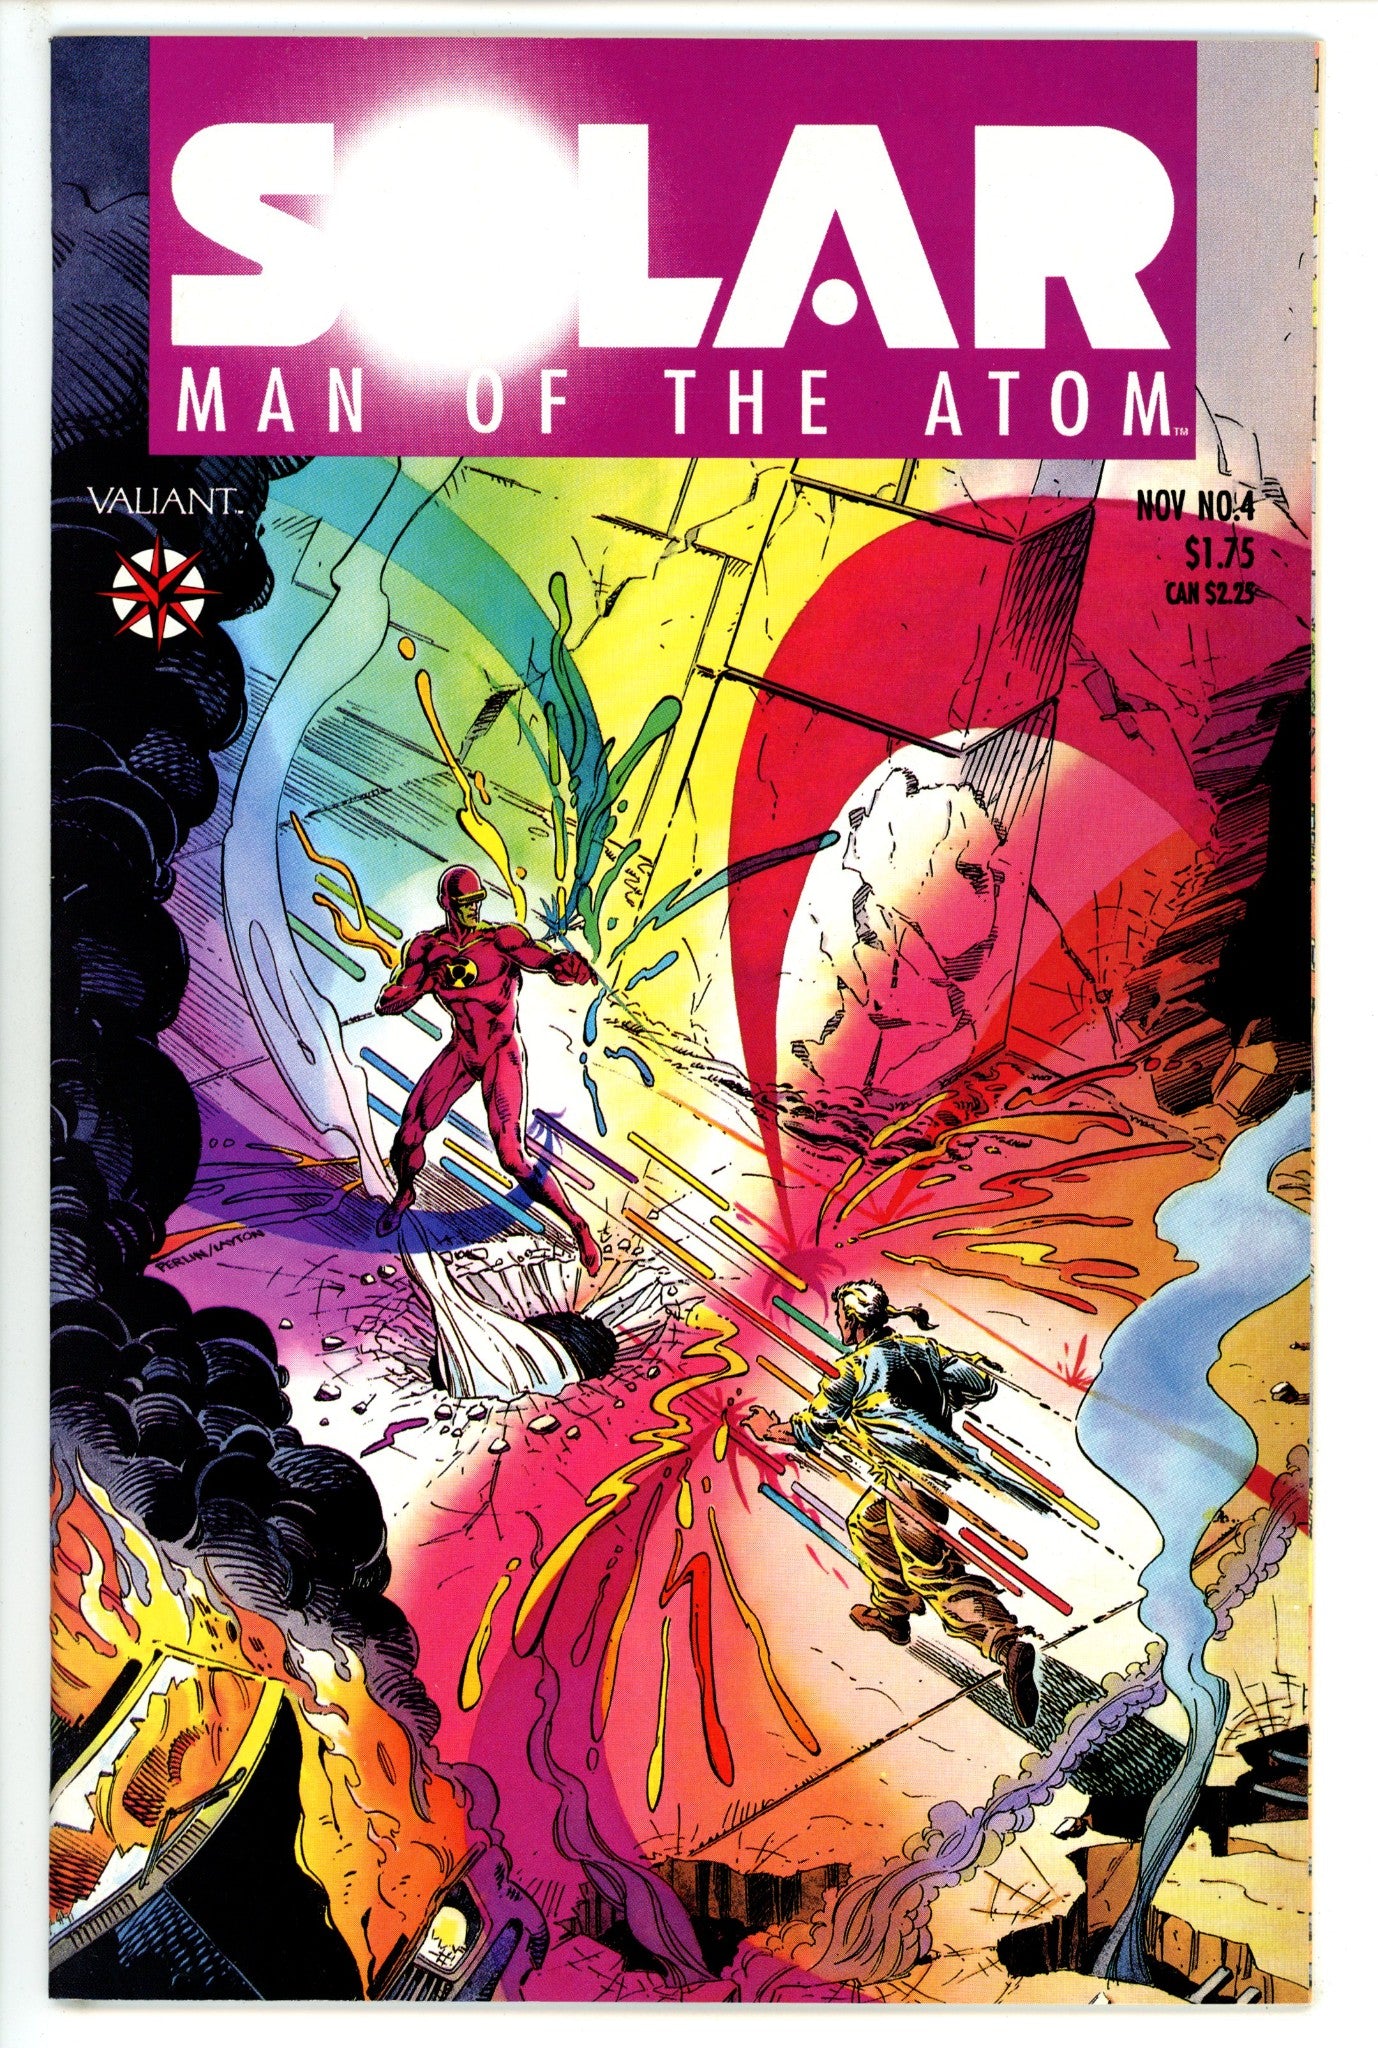 Solar Man of the Atom Vol 1 4 VF/NM (1991)